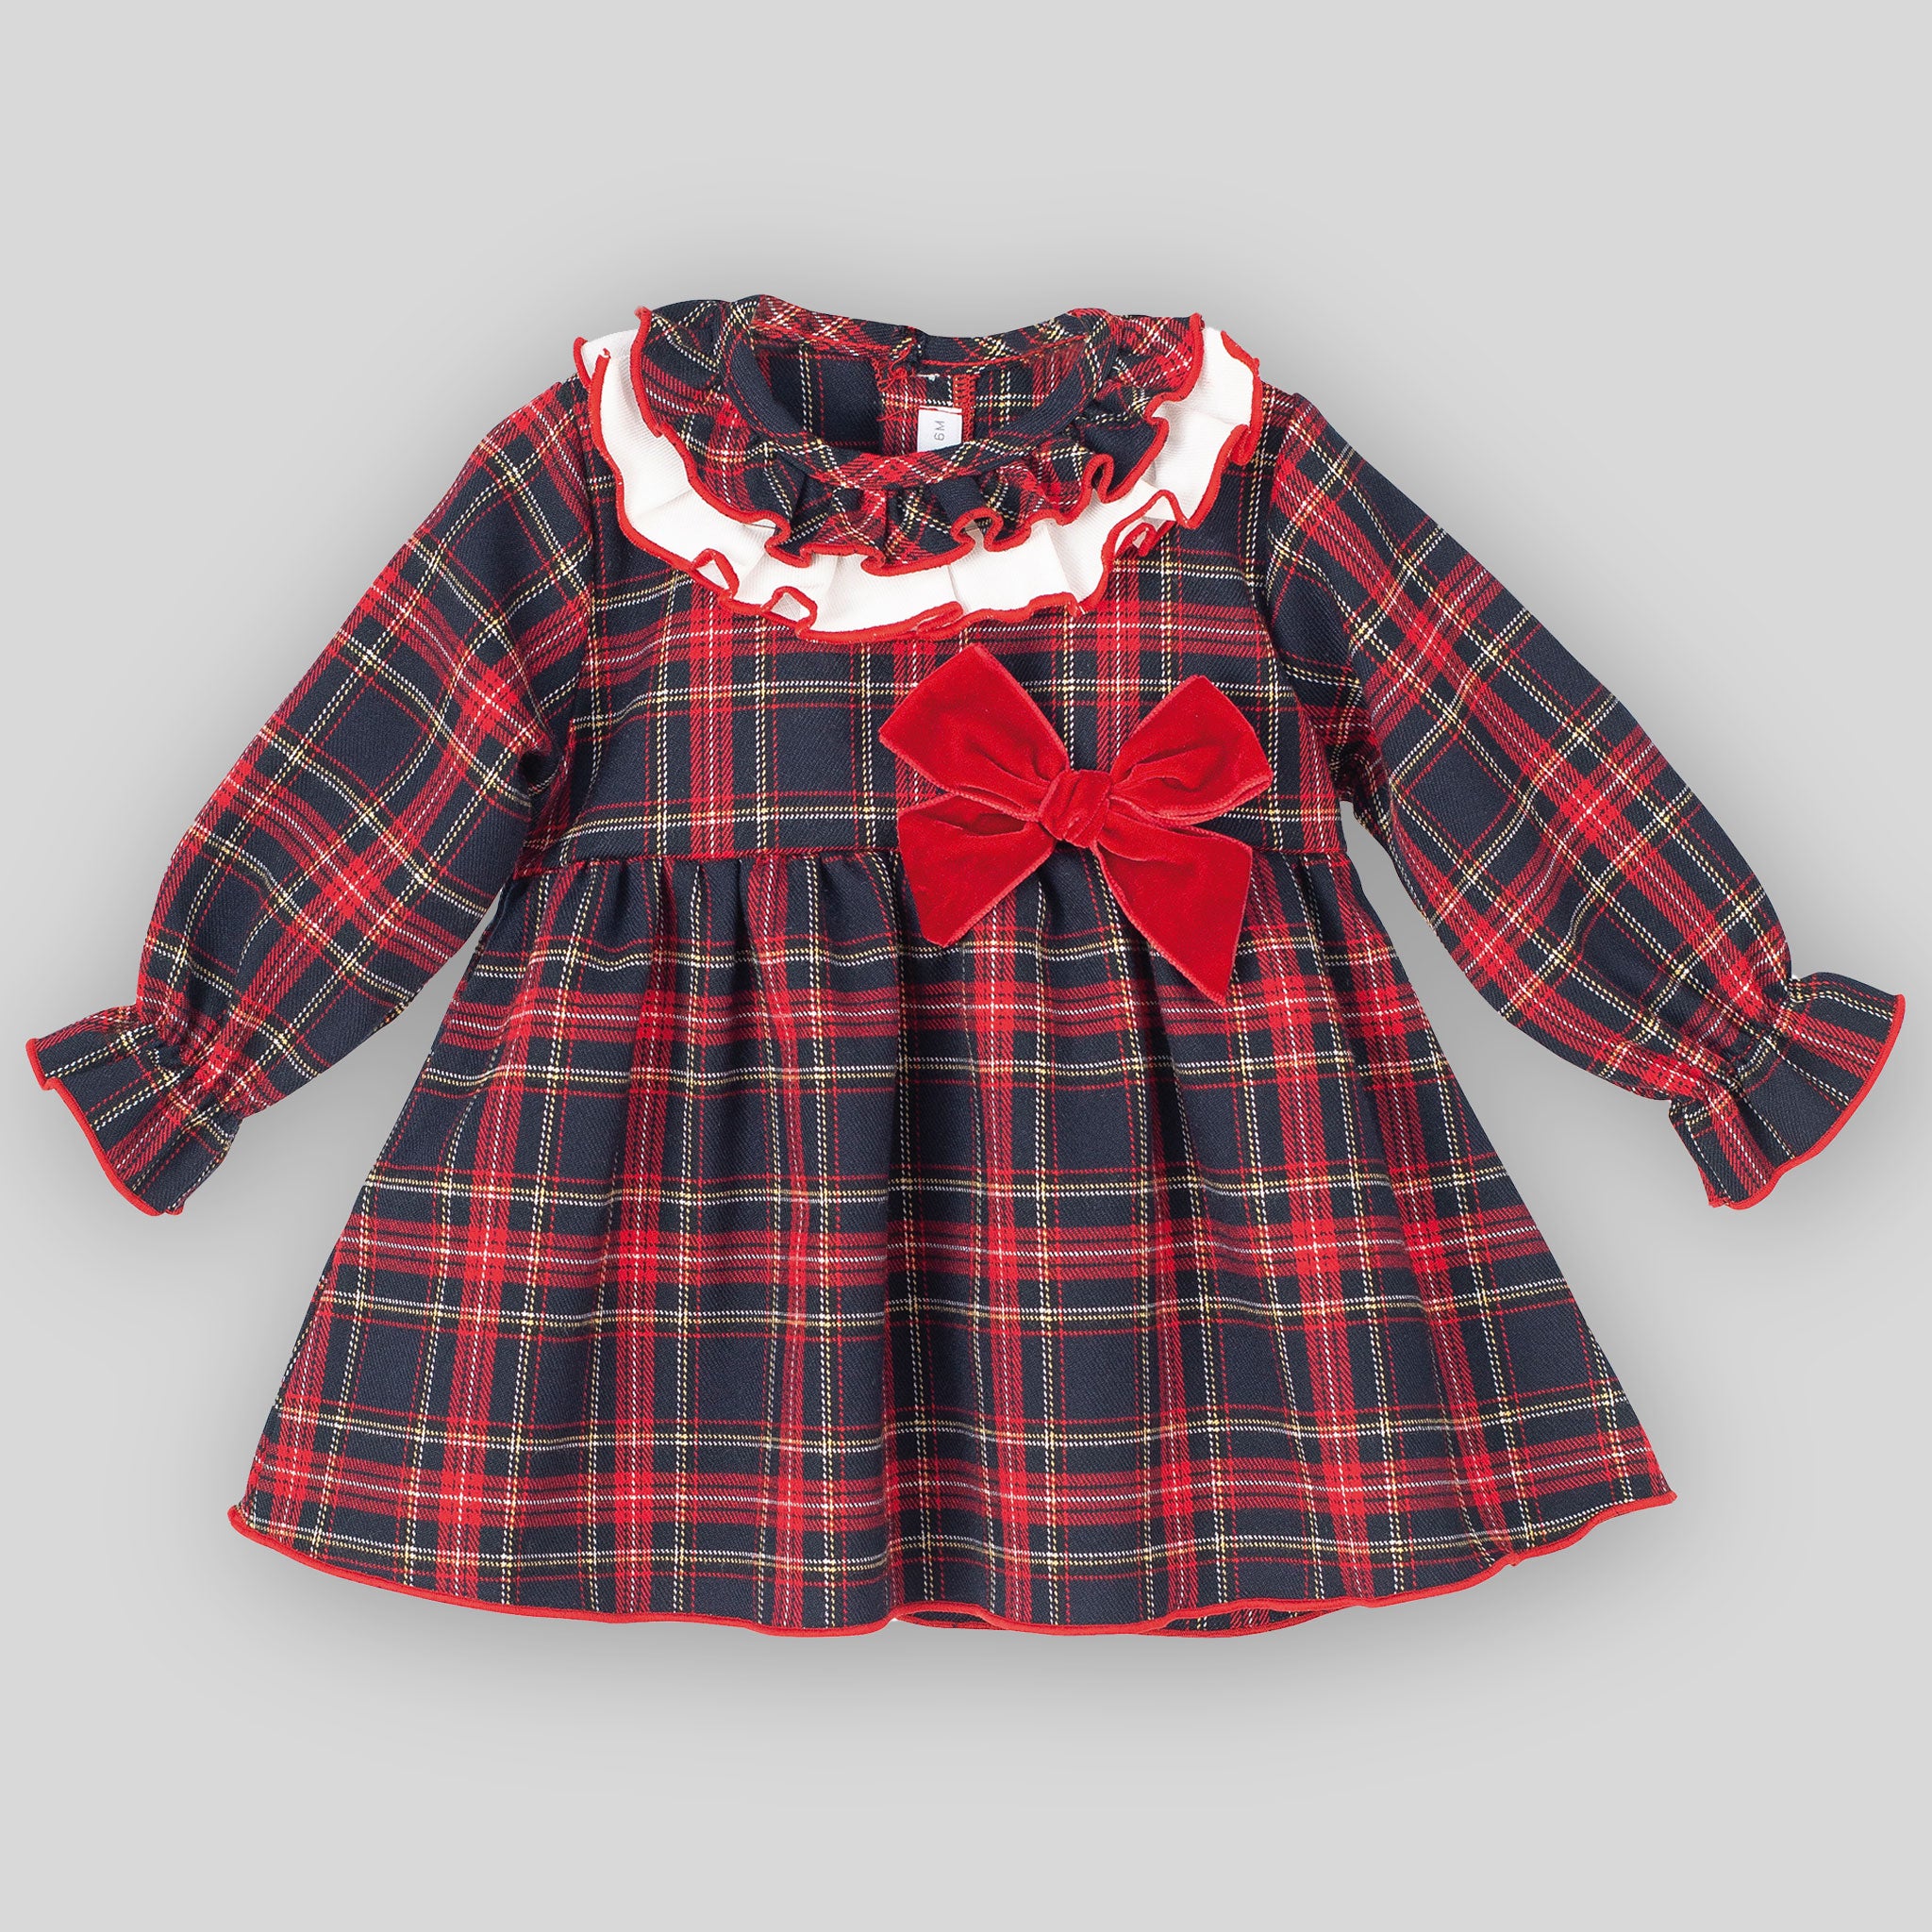 Baby girls red tartan dress